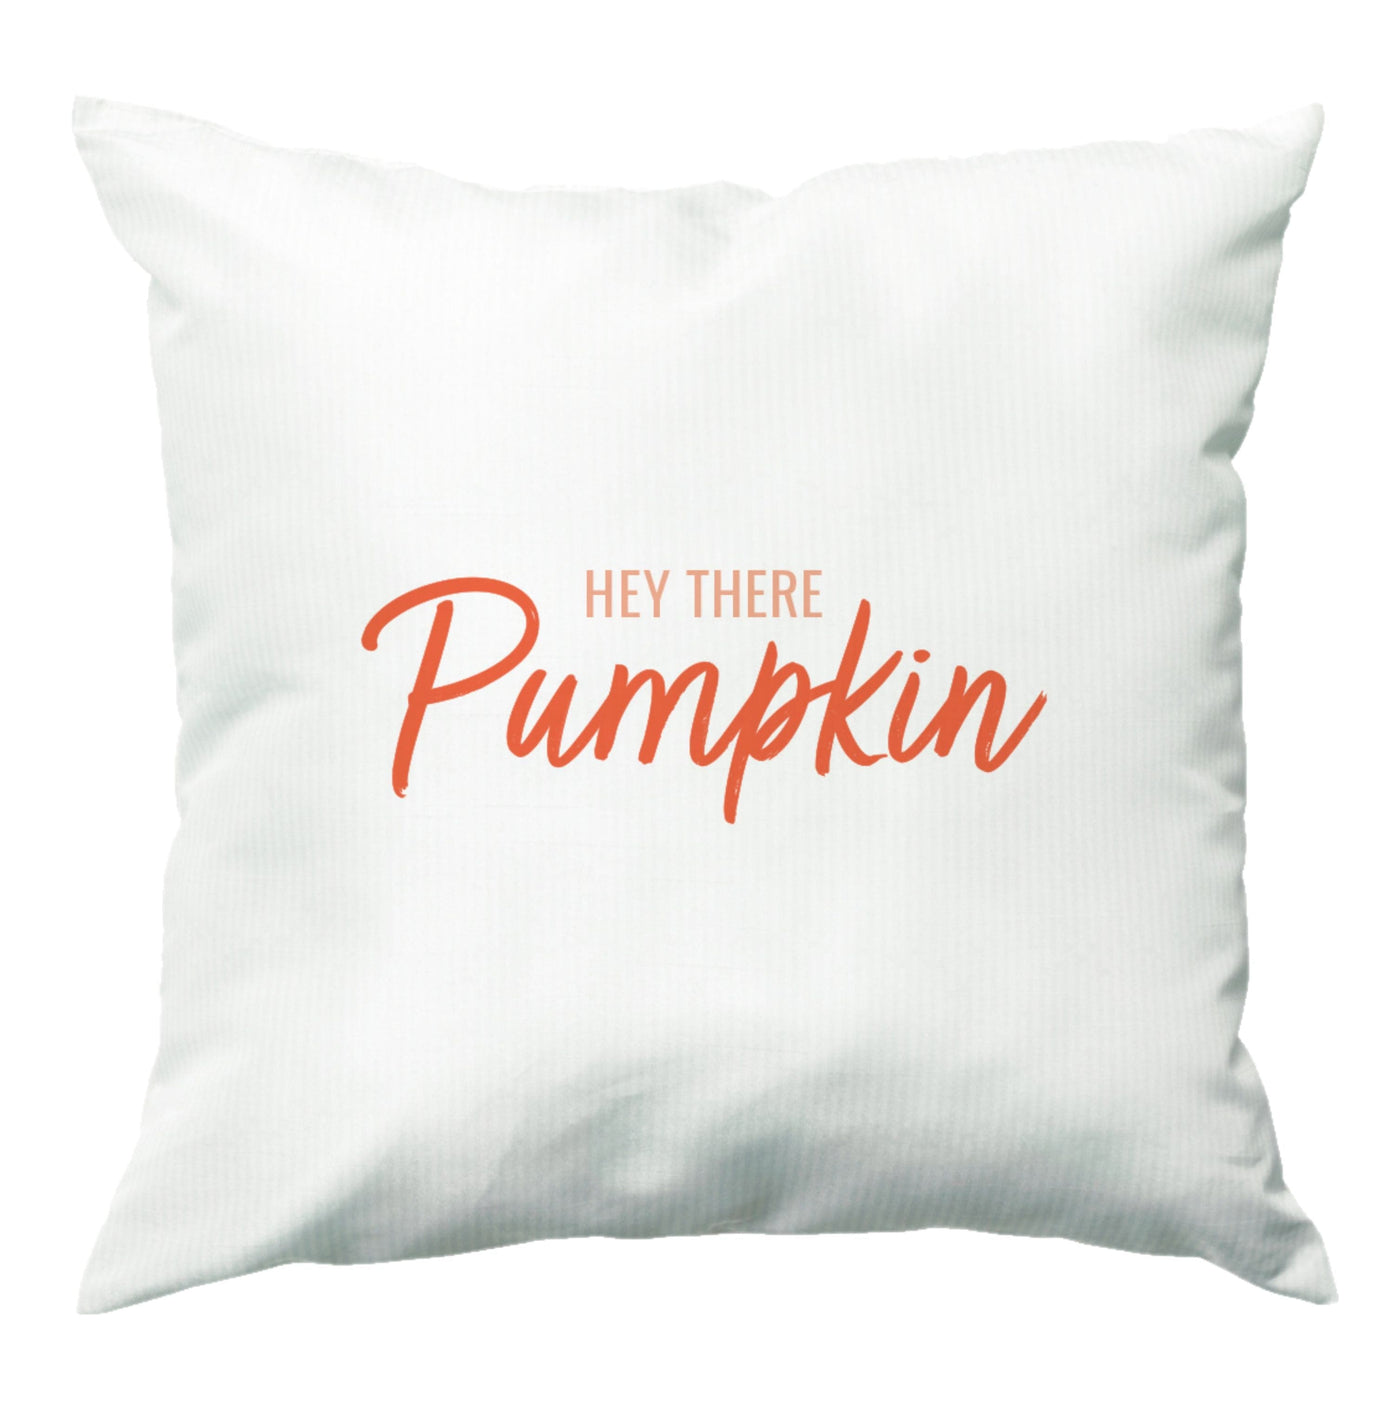 Hey There Pumpkin - Halloween Cushion